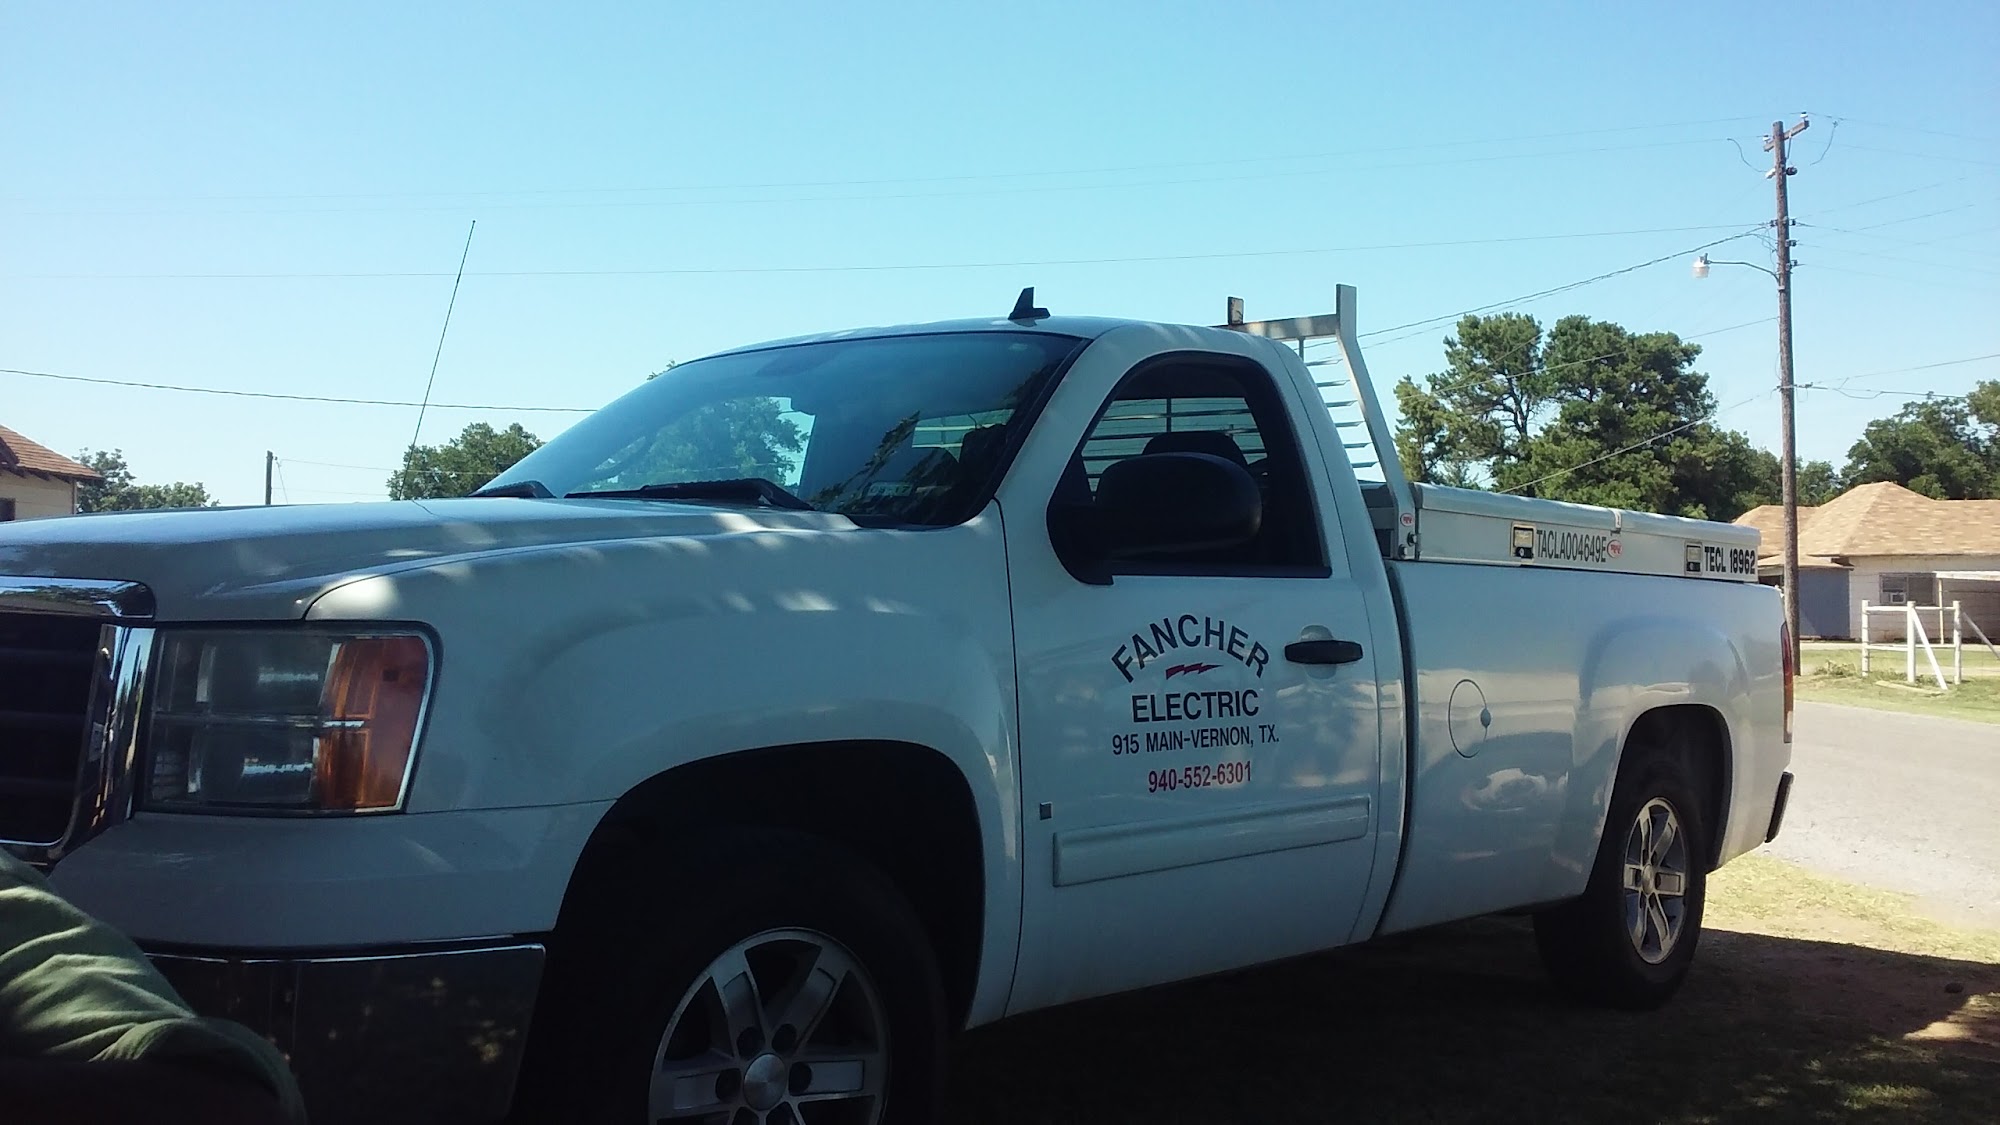 Fancher Electric 915 Main St, Vernon Texas 76384